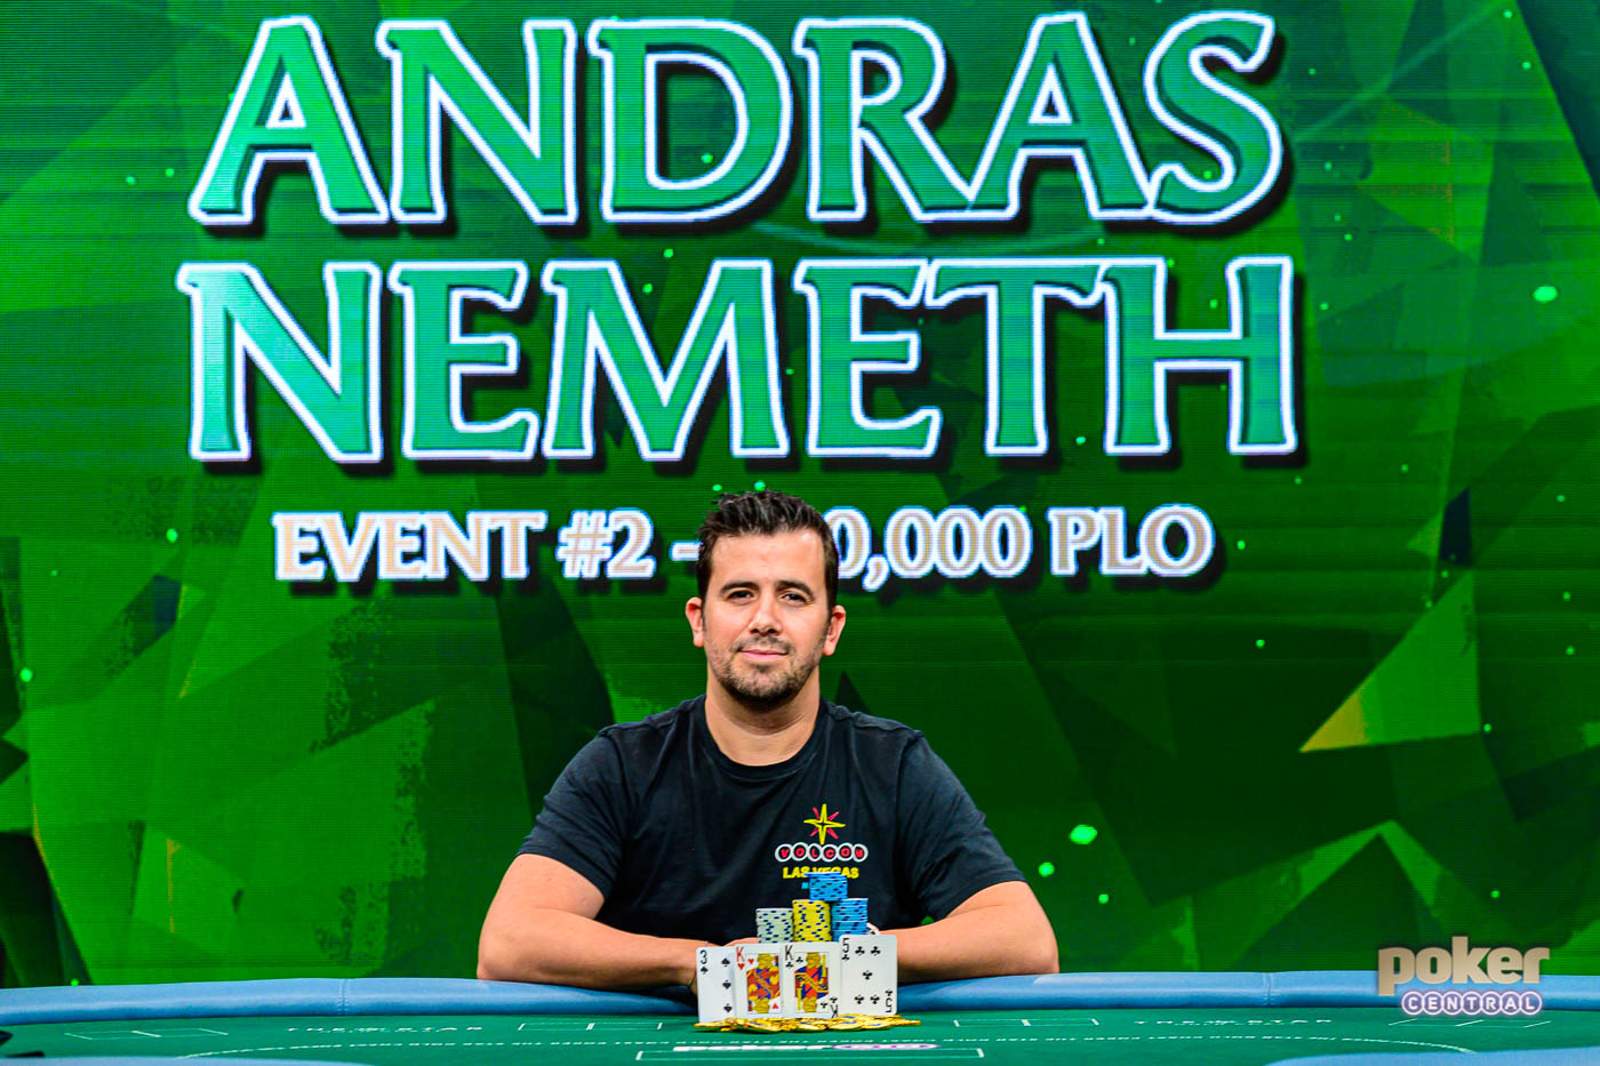 Andras Nemeth Wins Australian Poker Open Event #2 For A$146,200